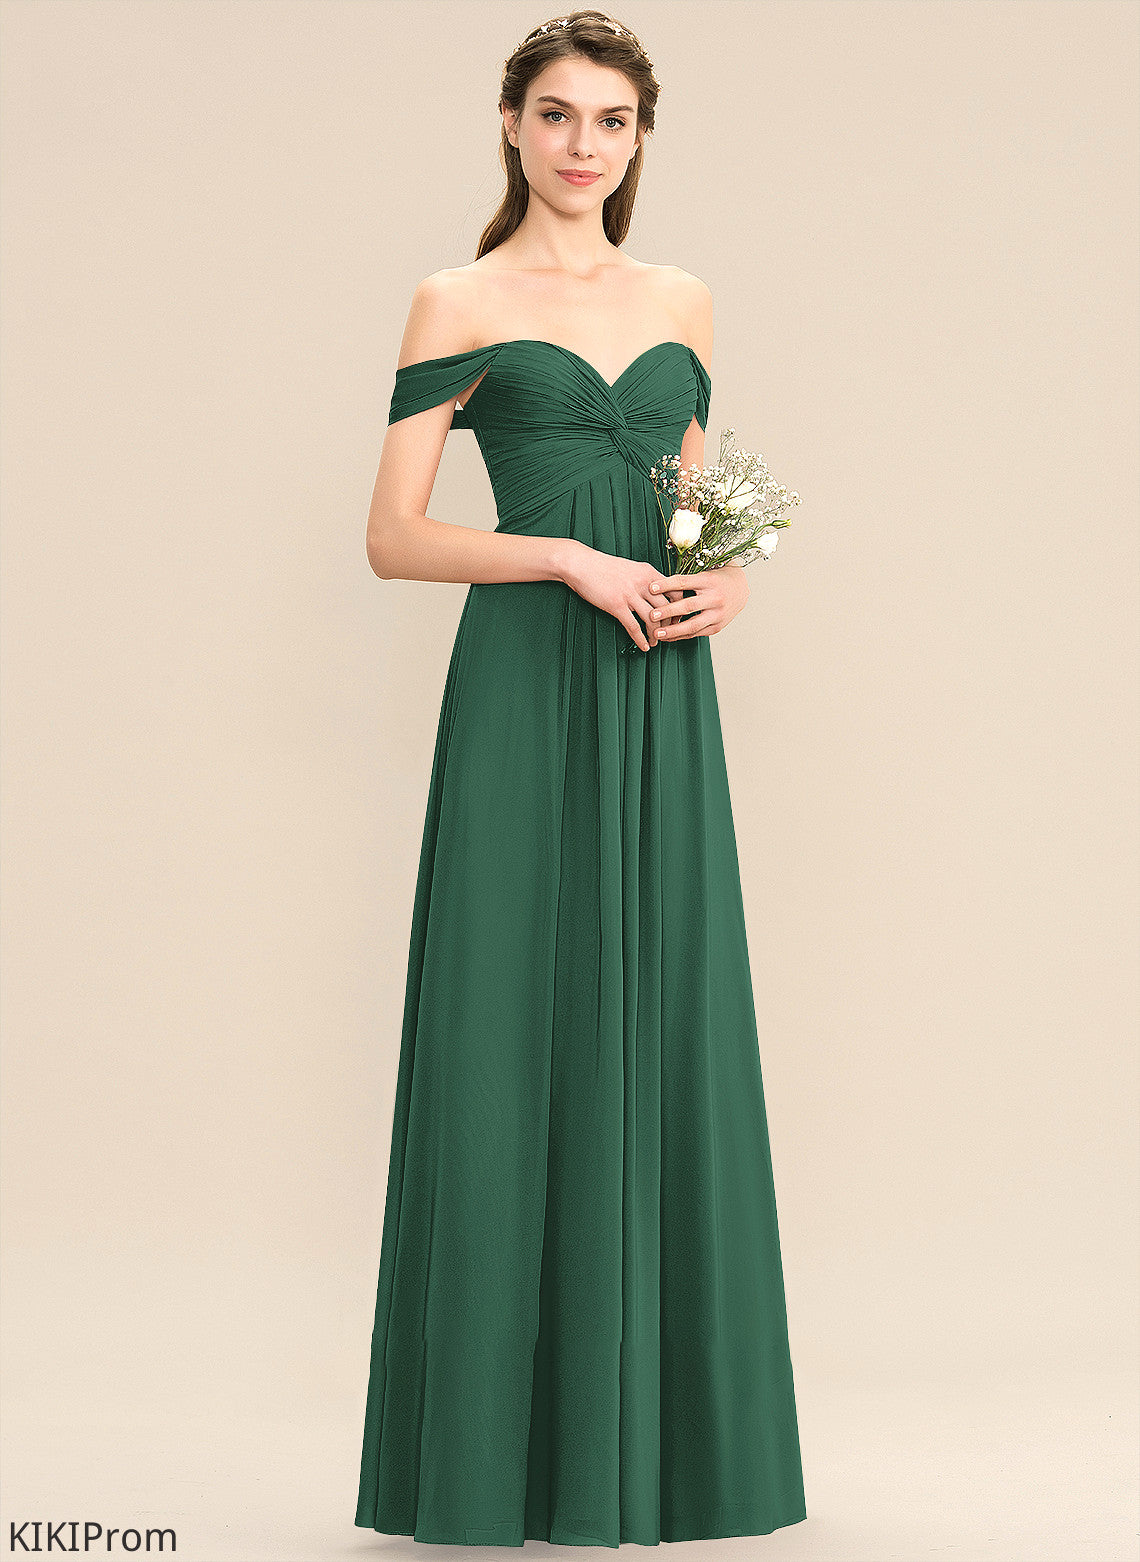 Embellishment Ruffle Off-the-Shoulder Silhouette Length Floor-Length Neckline A-Line Fabric Delaney High Low Sleeveless Bridesmaid Dresses